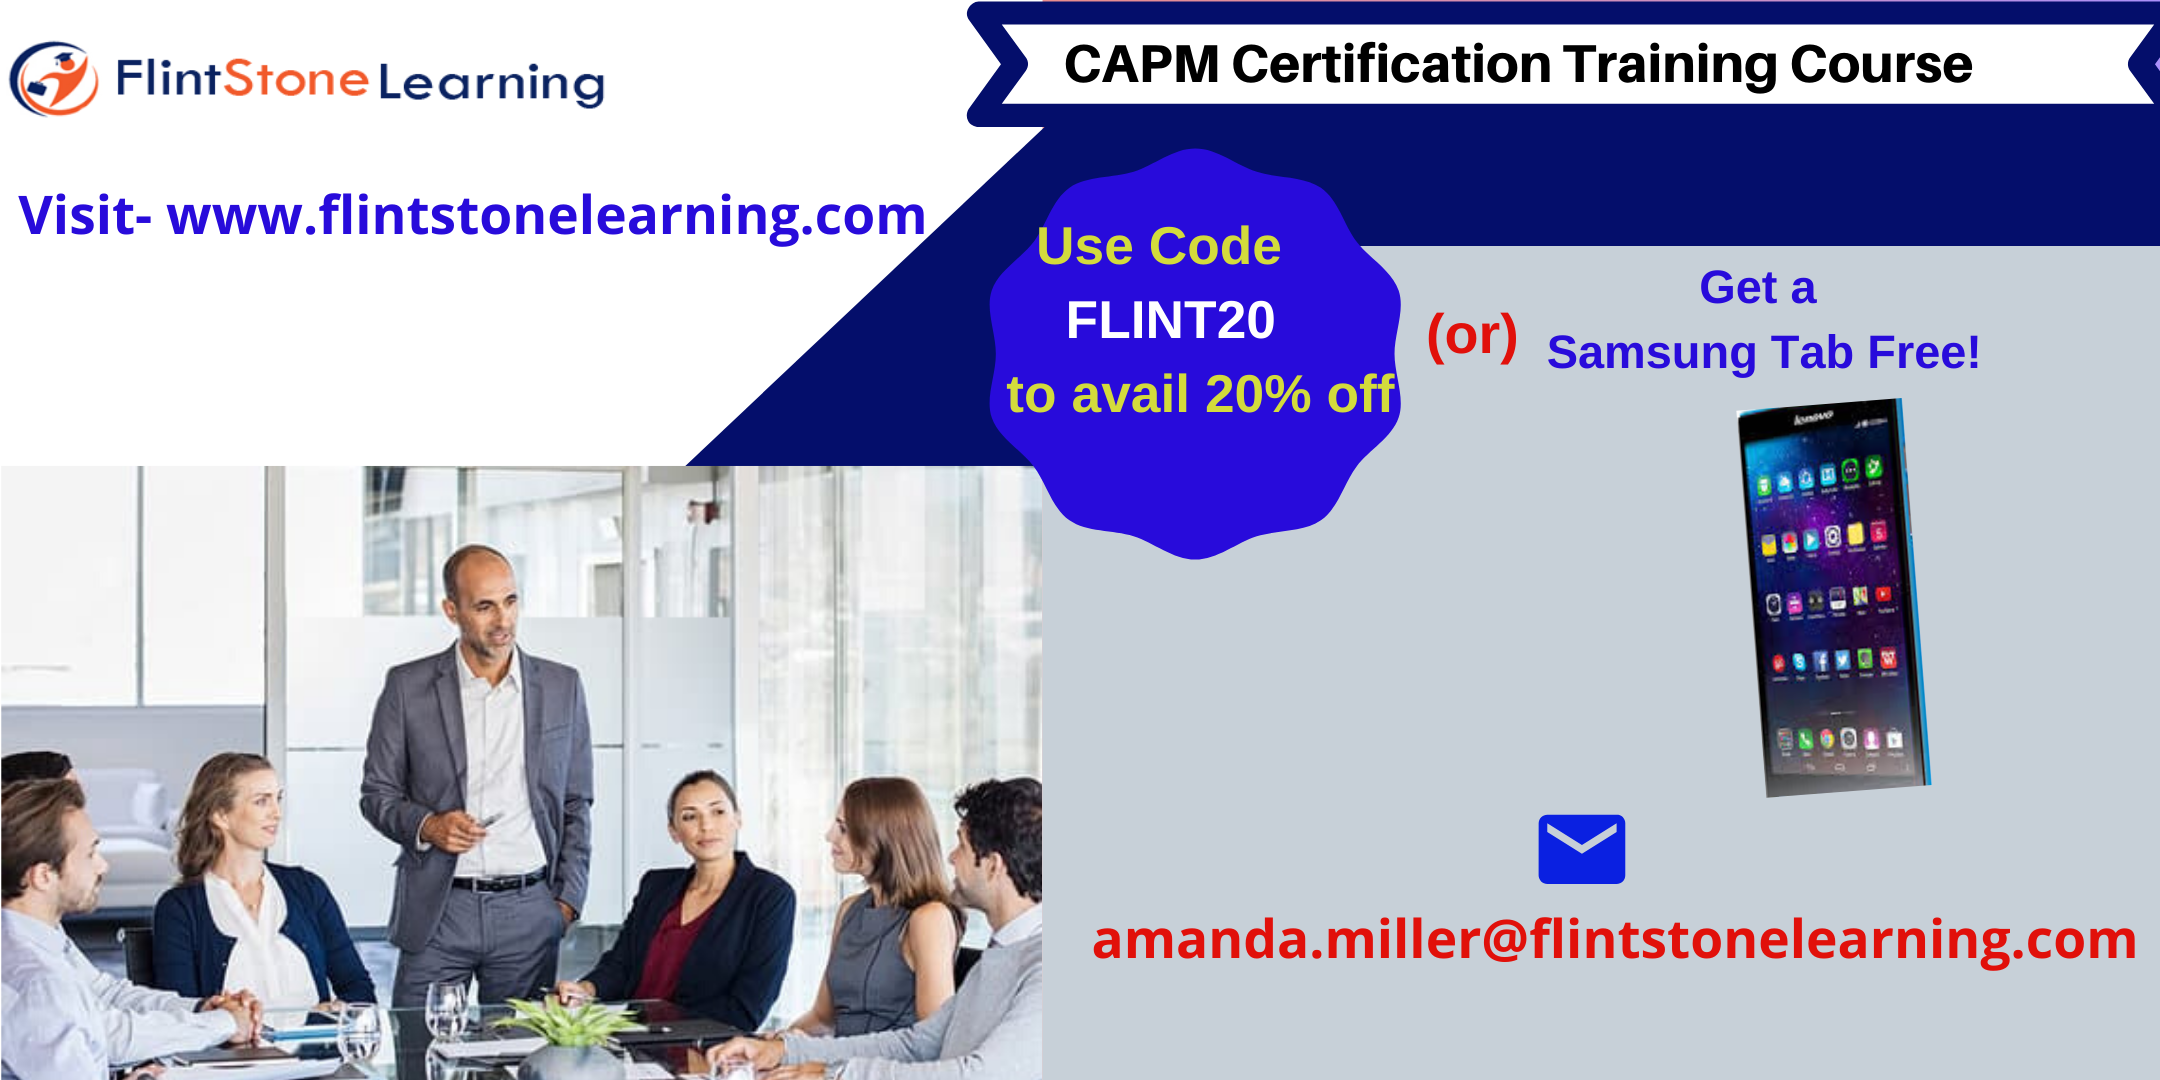 CAPM Certification Training Course in Santa Fe, NM